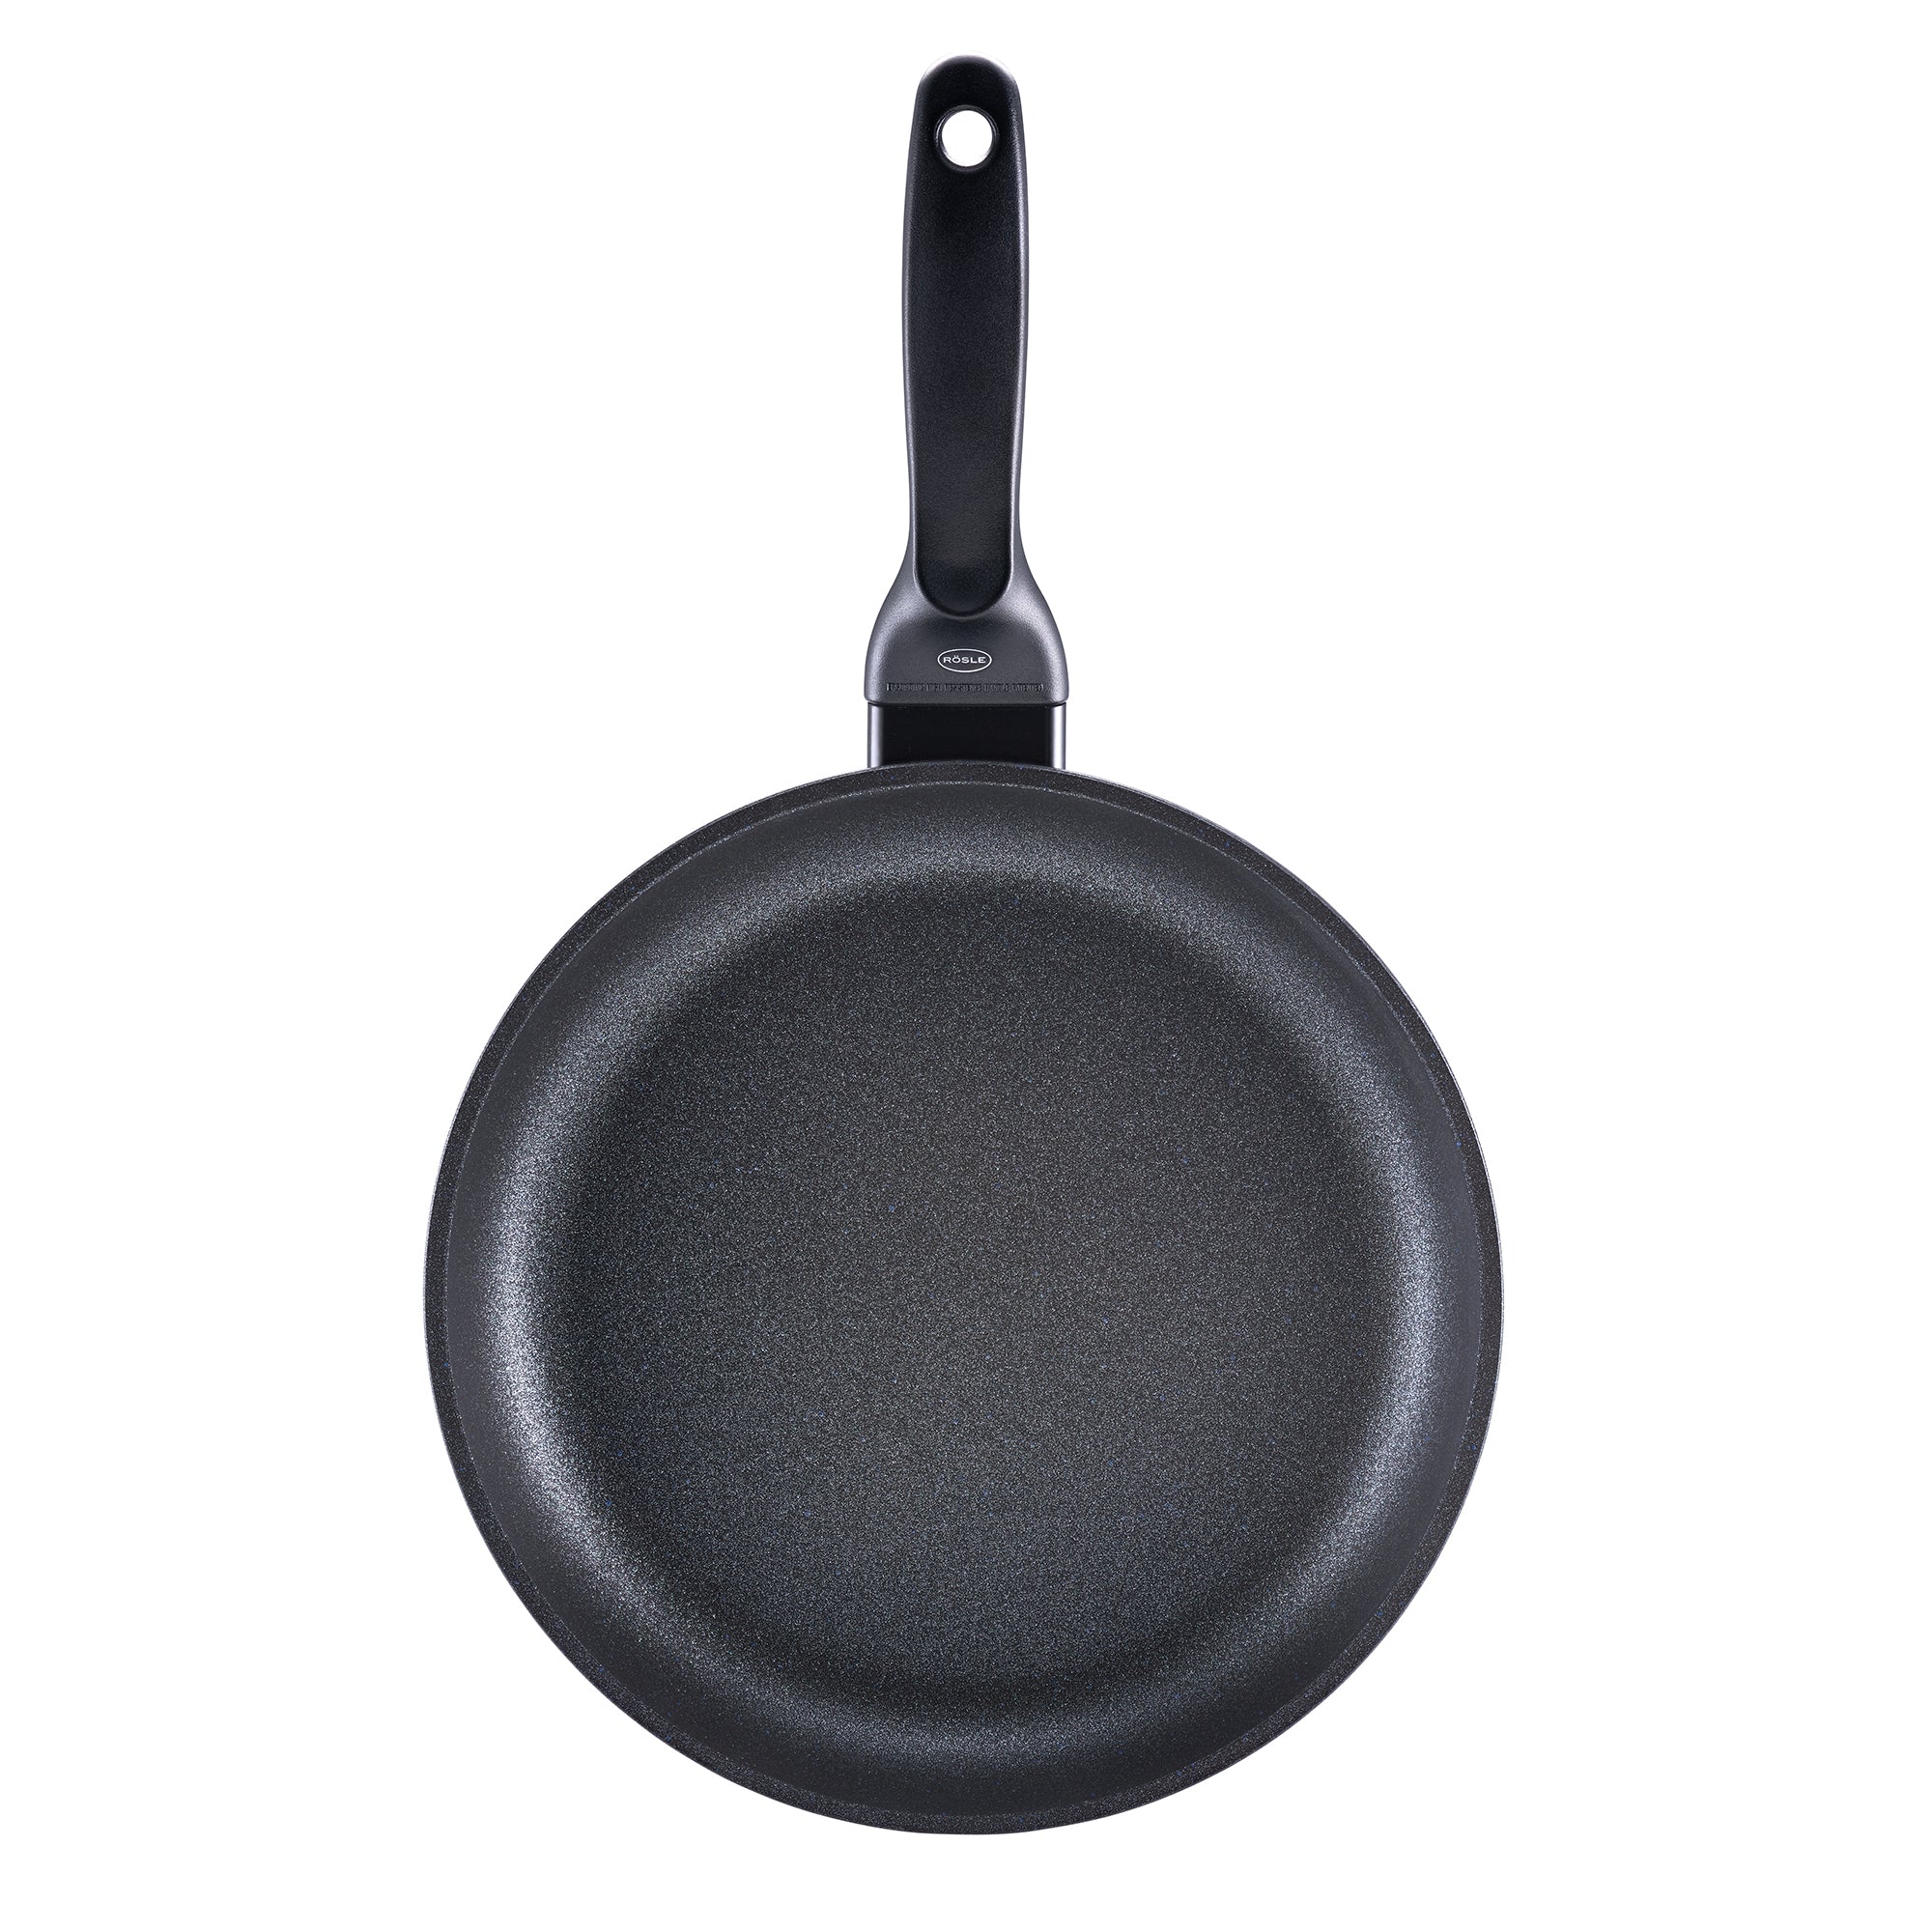 Rösle "Cadini" Non-Stick Frying Pan